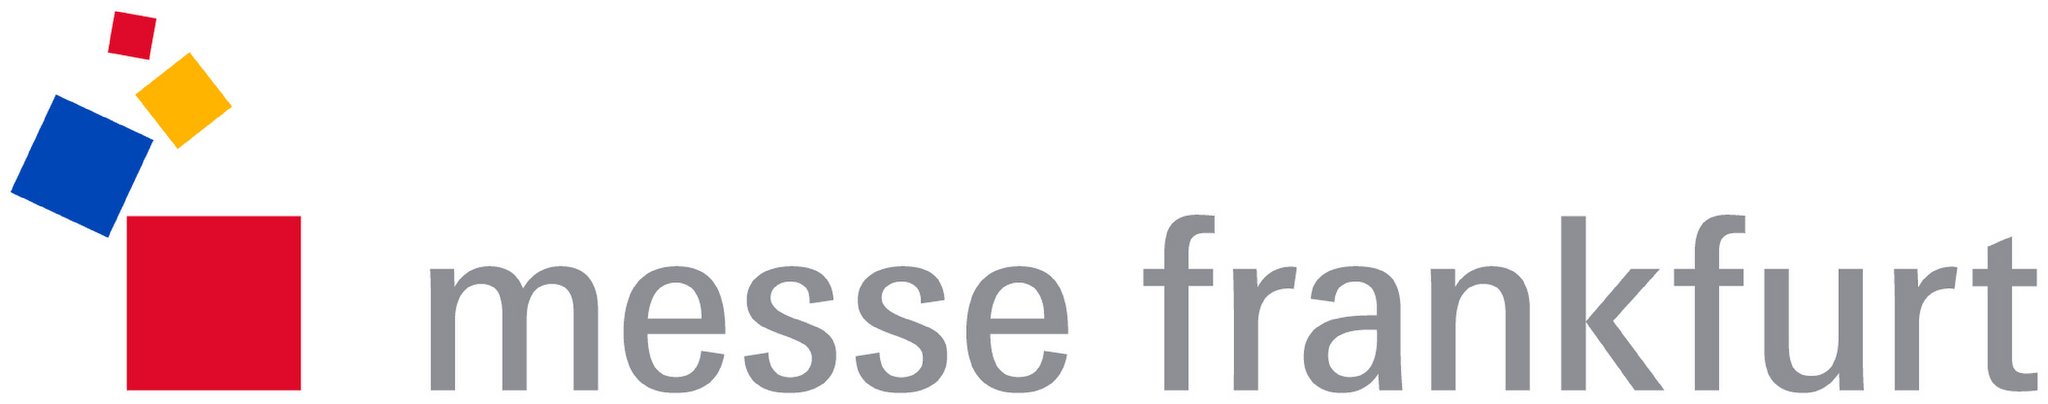 Partnership Renewal with Messe Frankfurt